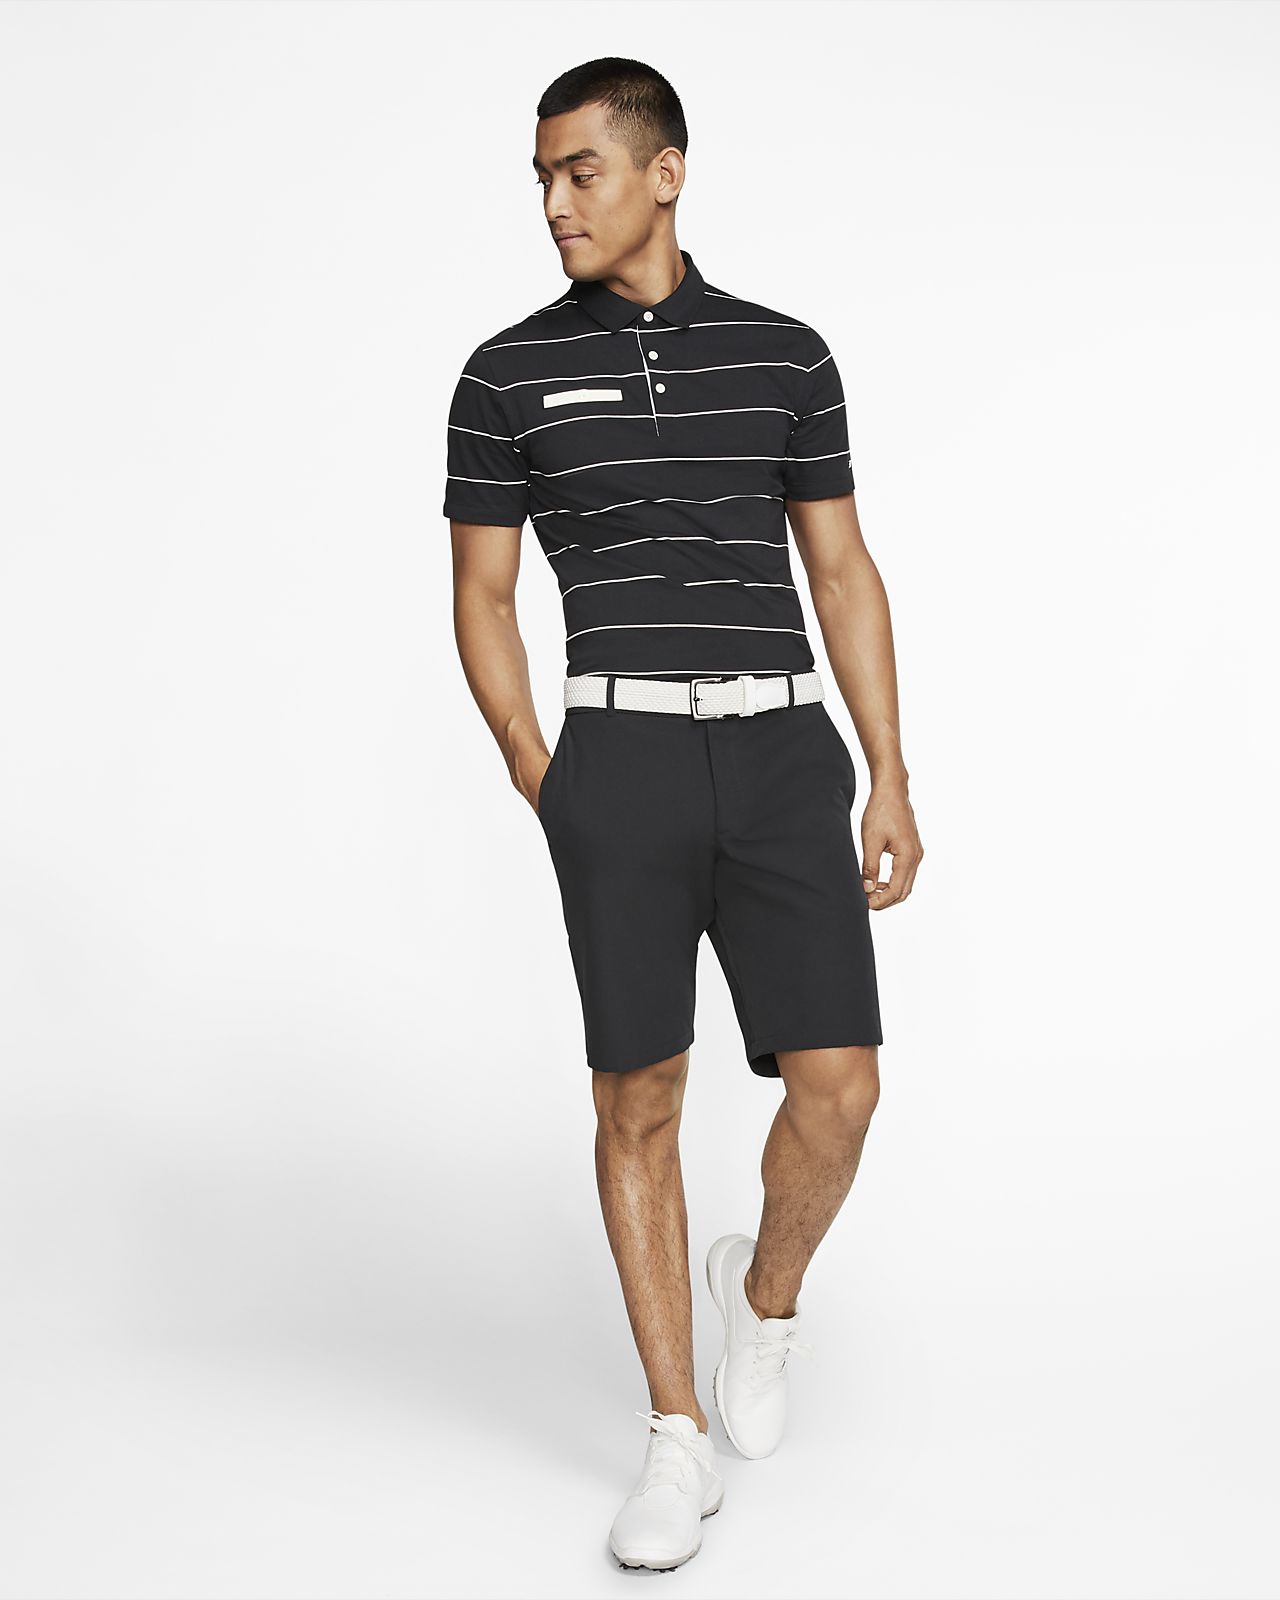 Buy > nike men's solid slim fit flex golf shorts > in stock